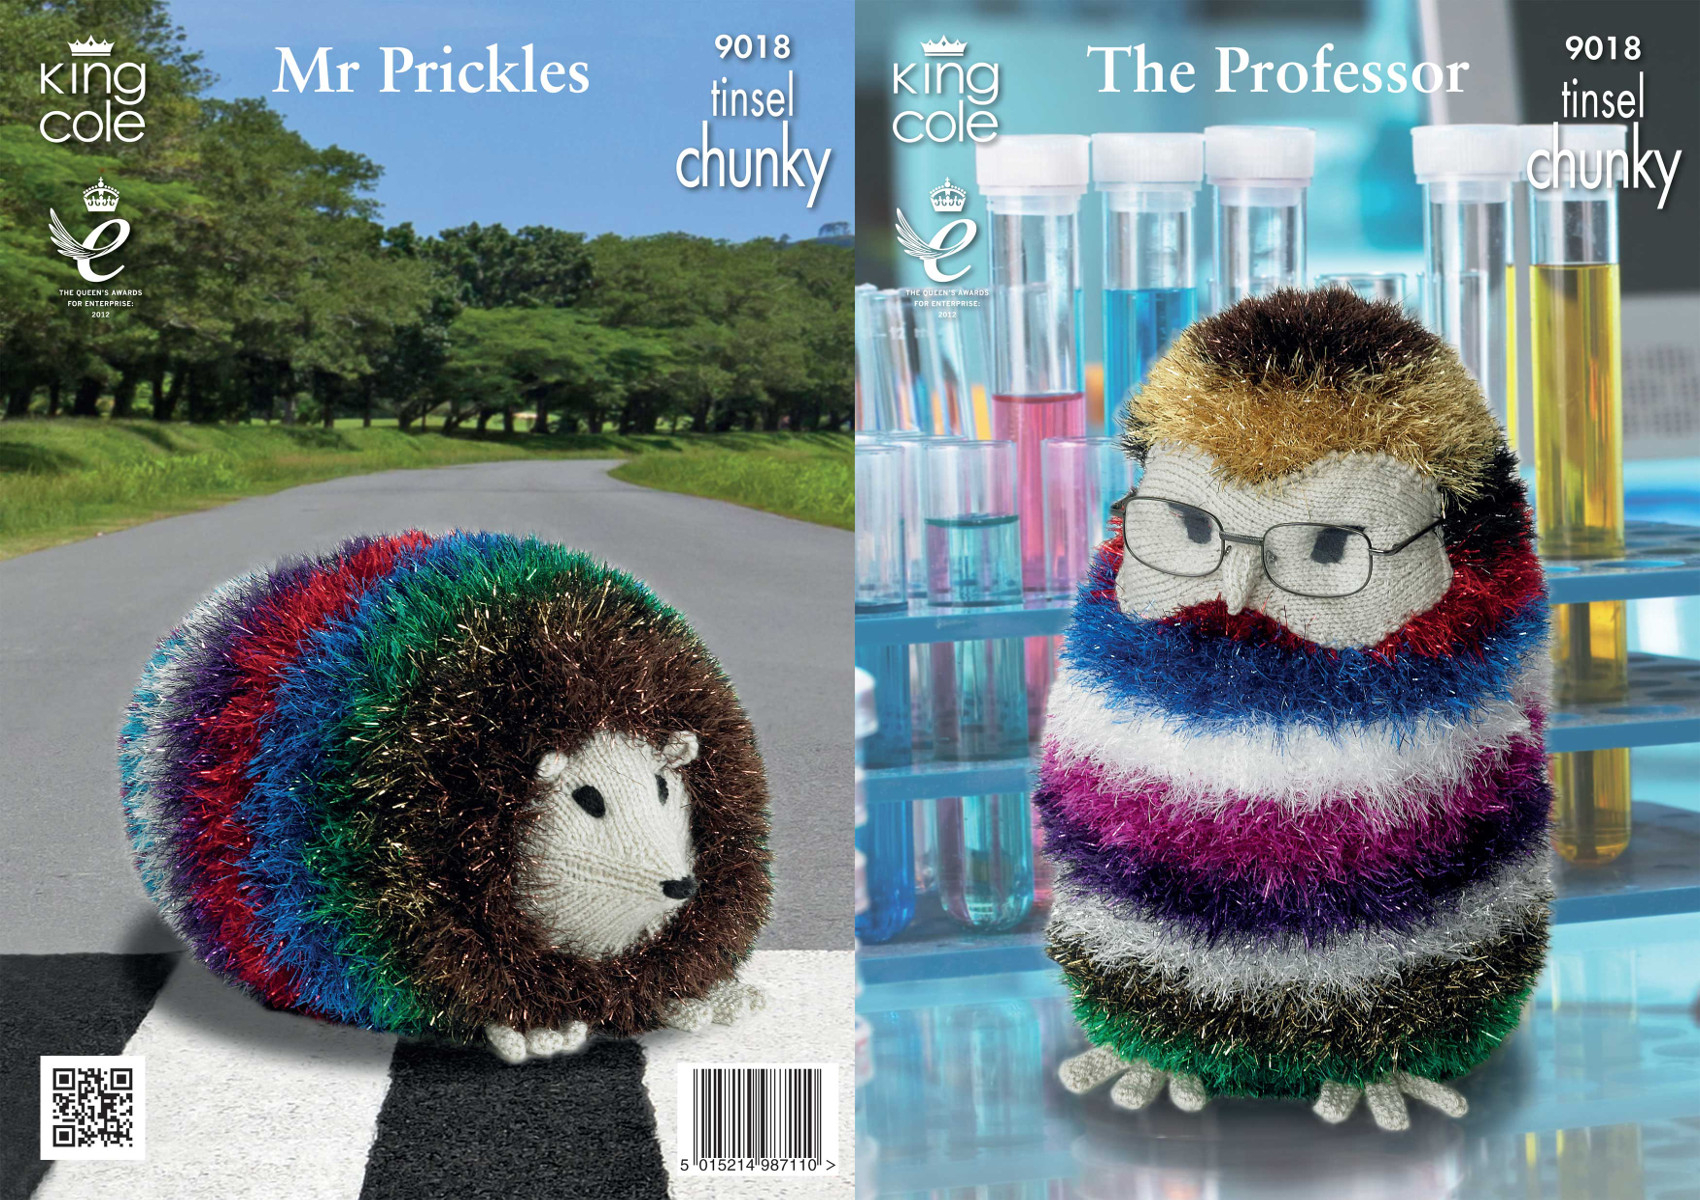 Knitting Patterns For Toys Uk Details About King Cole The Professor Owl Mr Prickles Hedgehog Tinsel Knitting Pattern 9018